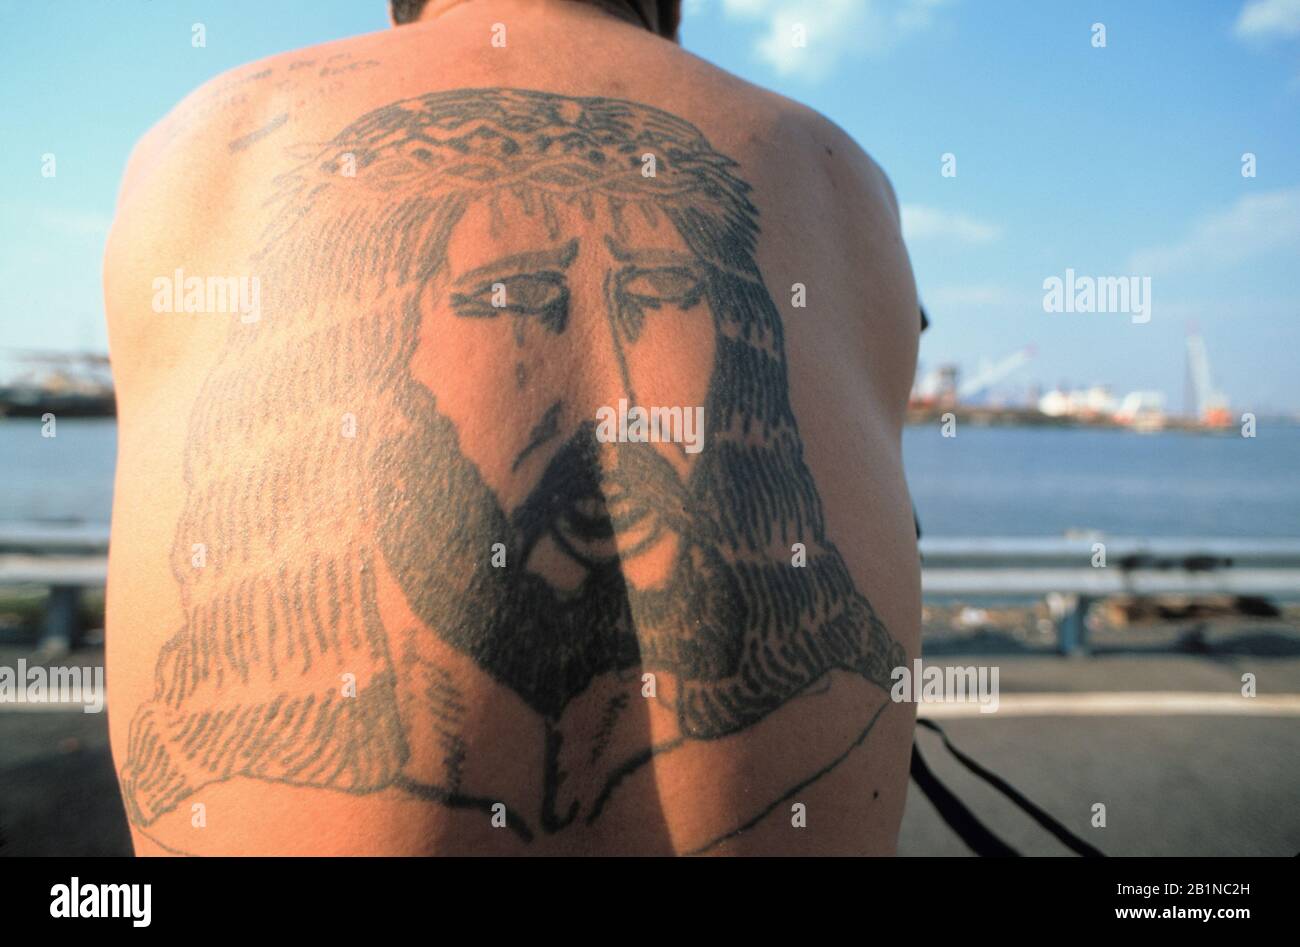 David Beckham gets picture of Jesus tattooed